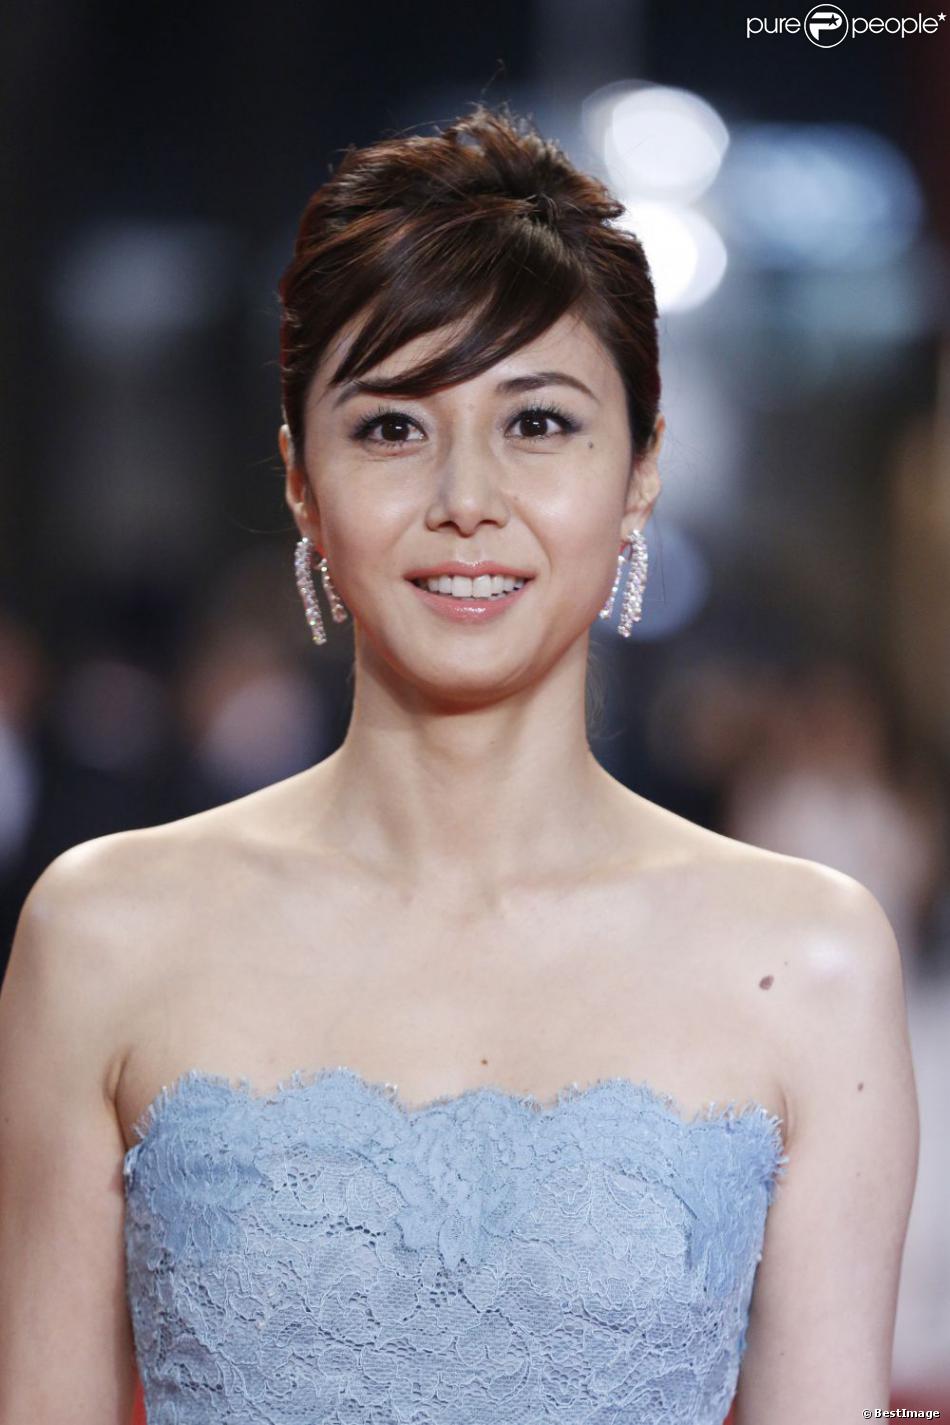 Top 10 Most Beautiful Japanese Women In The World Hot Actress Japan Reckon Talk